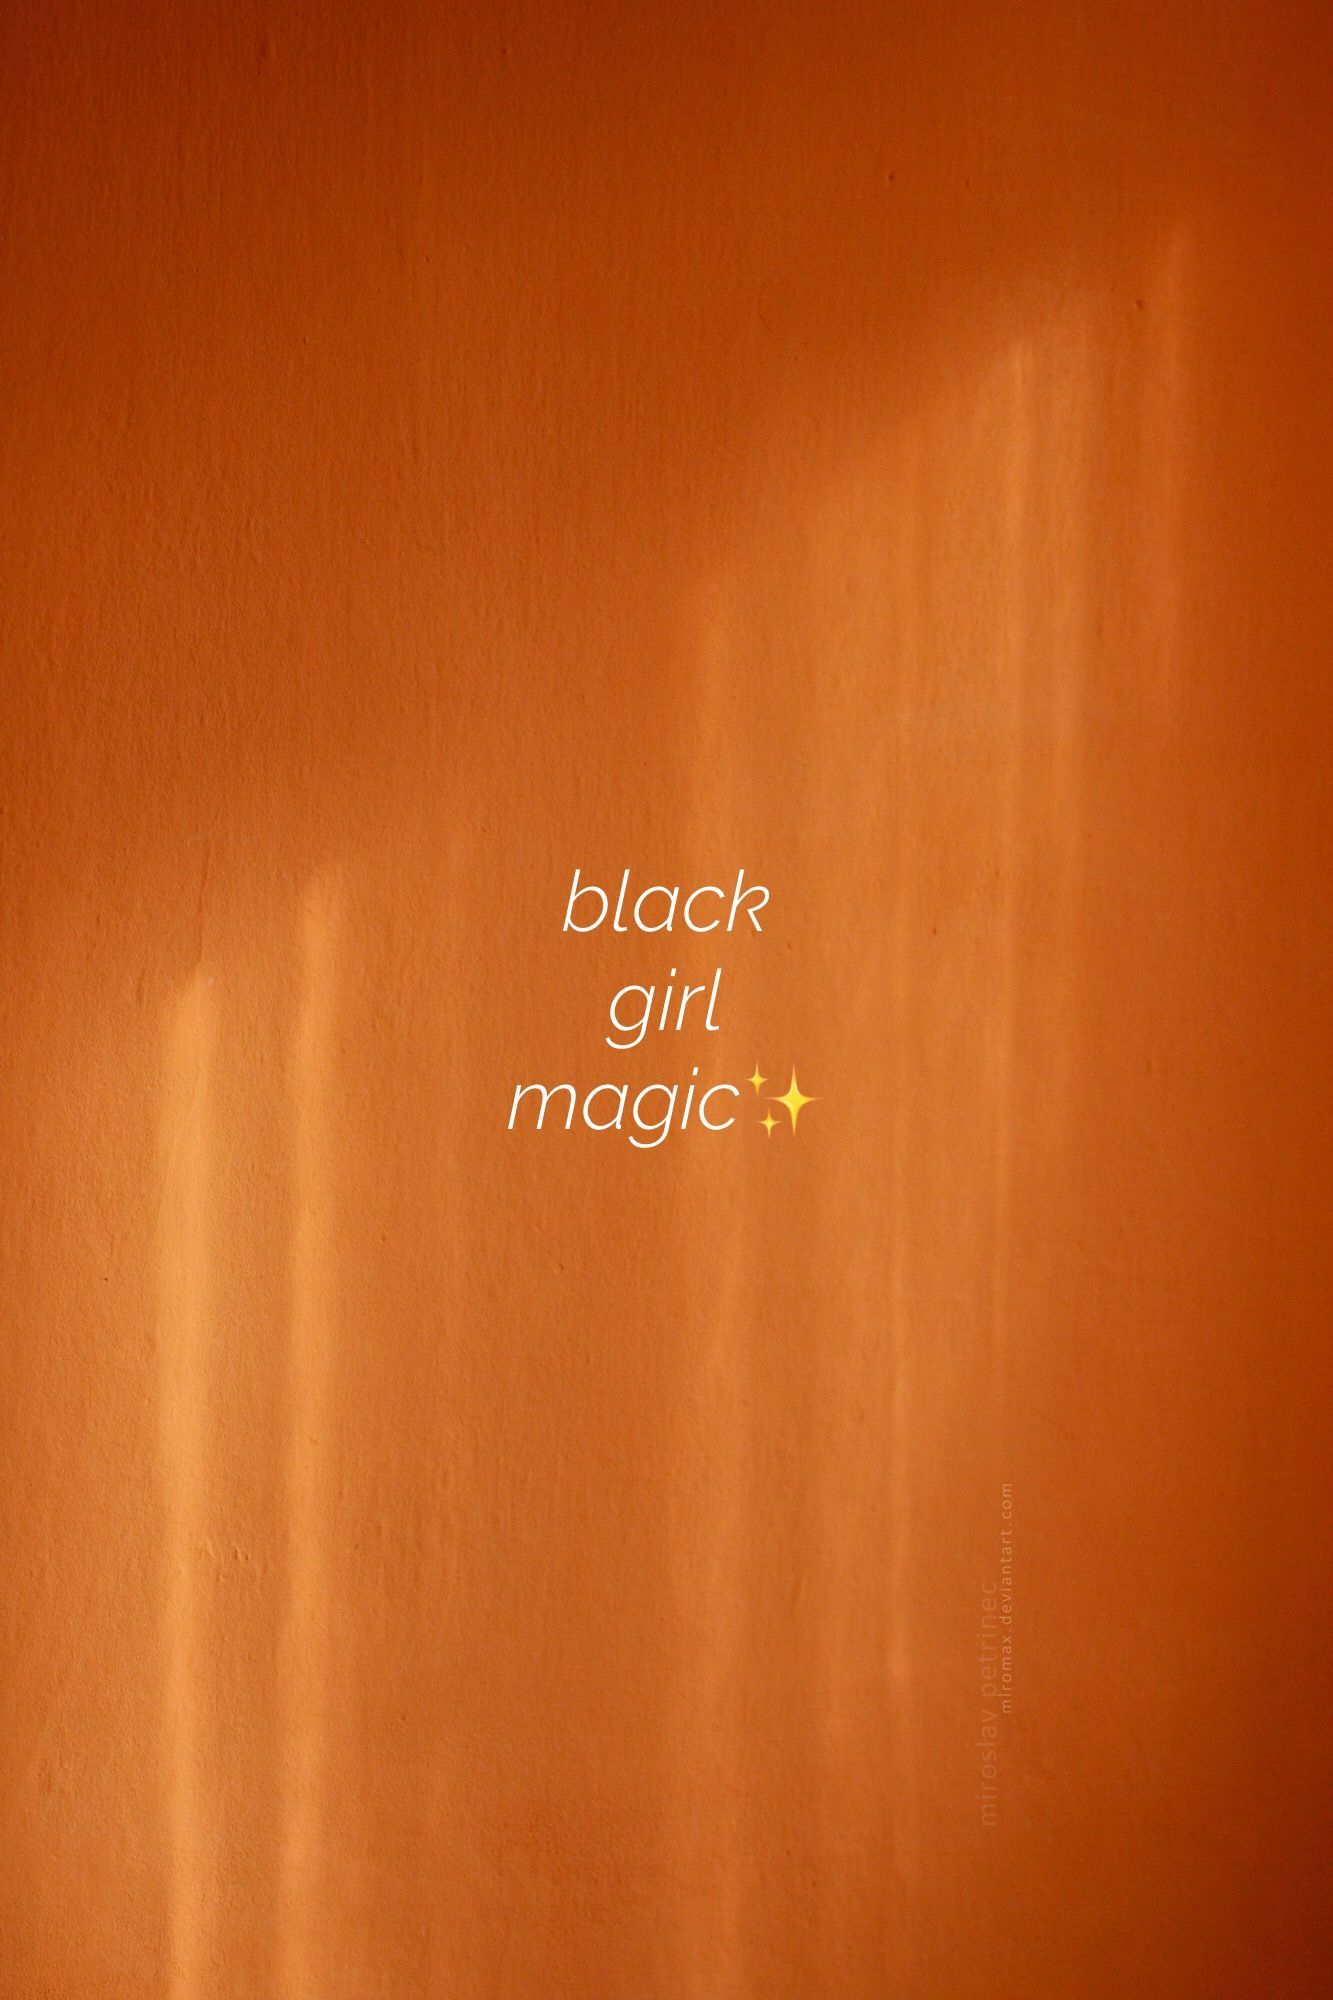 black girl magic✨ Made by me. Black girl aesthetic, Magic